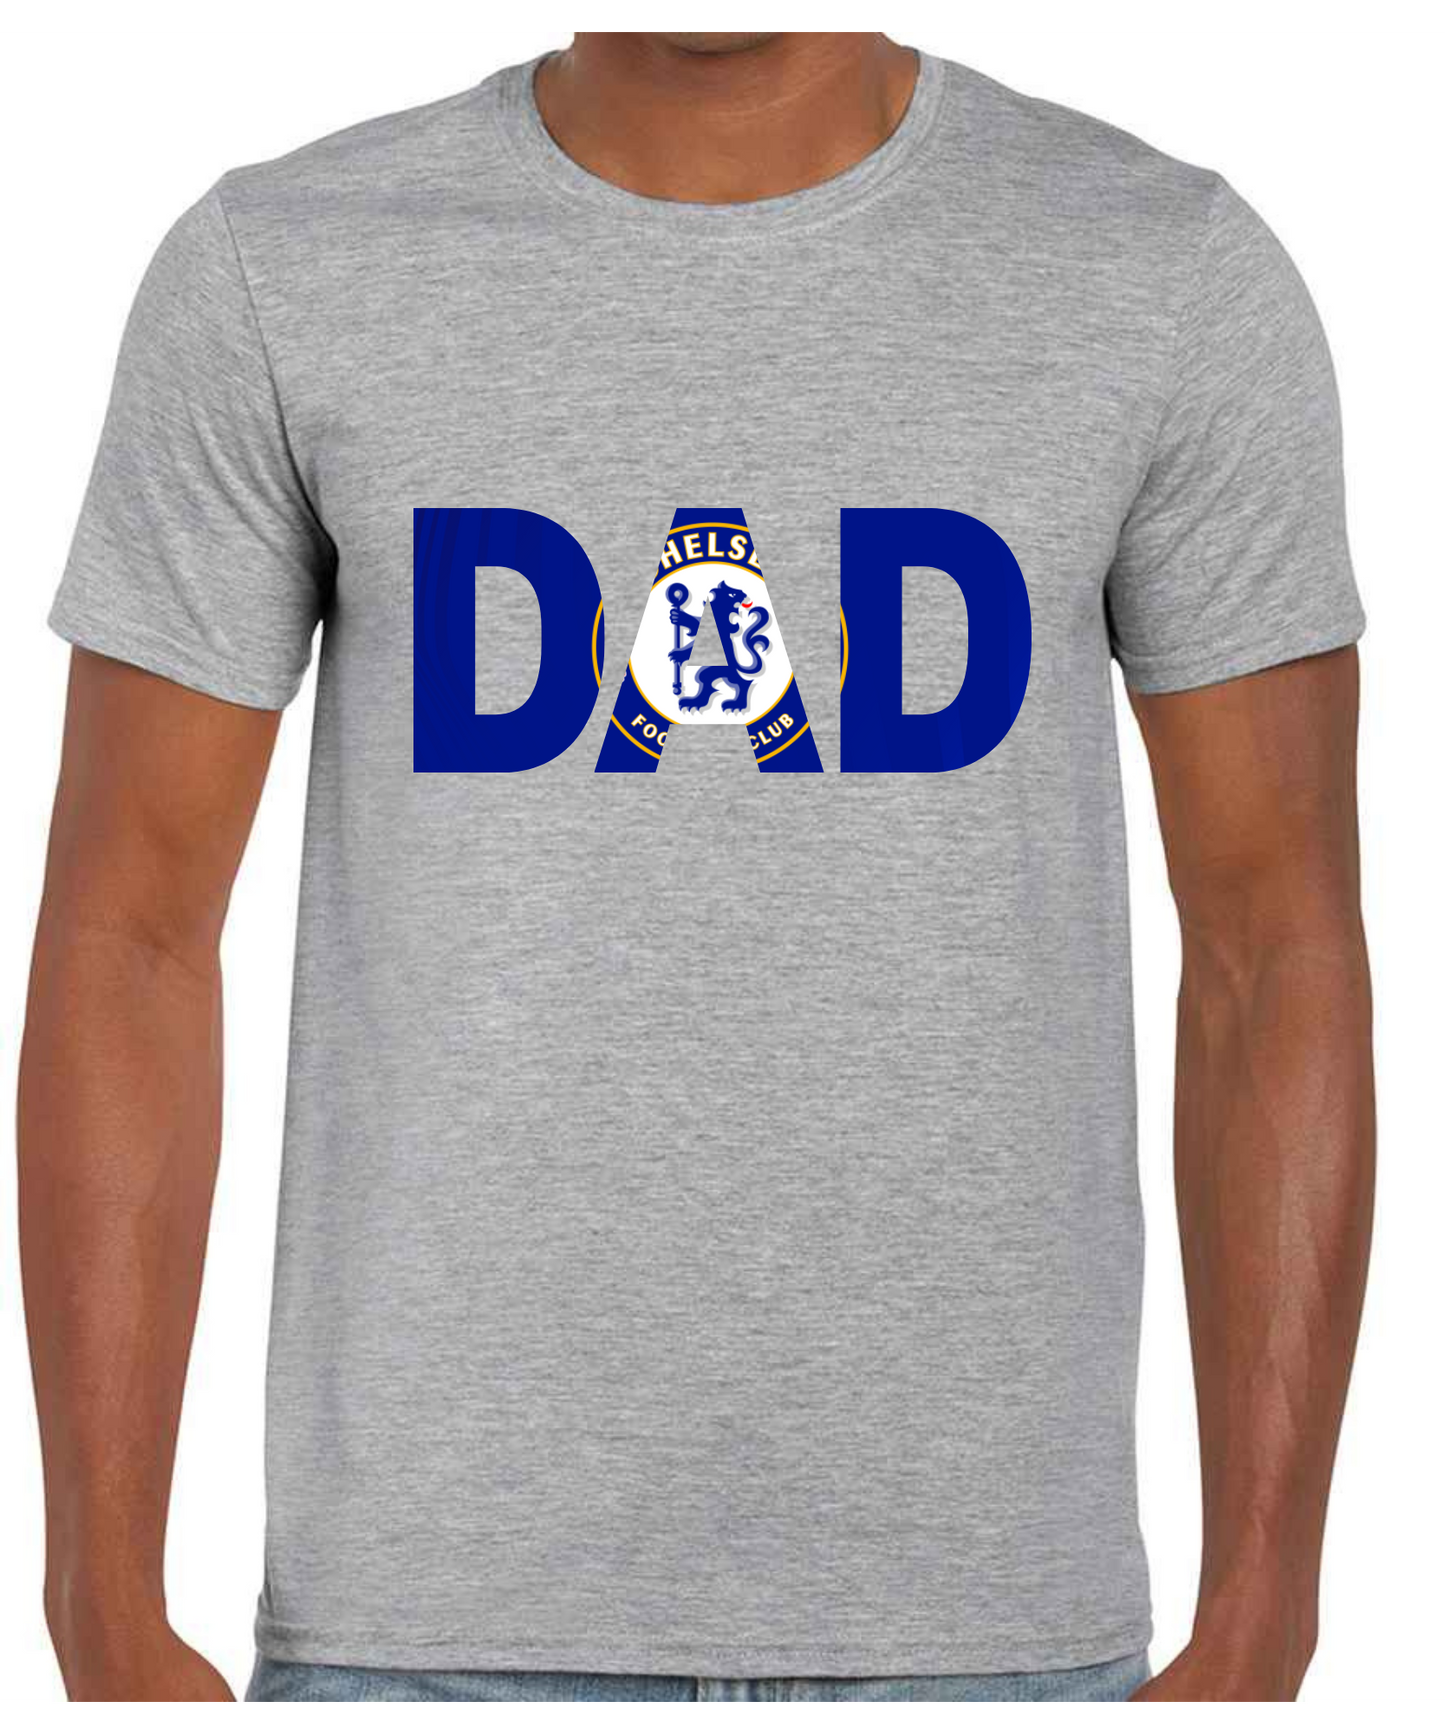 Chelsea - Dad T Shirt (White/Black/Grey)